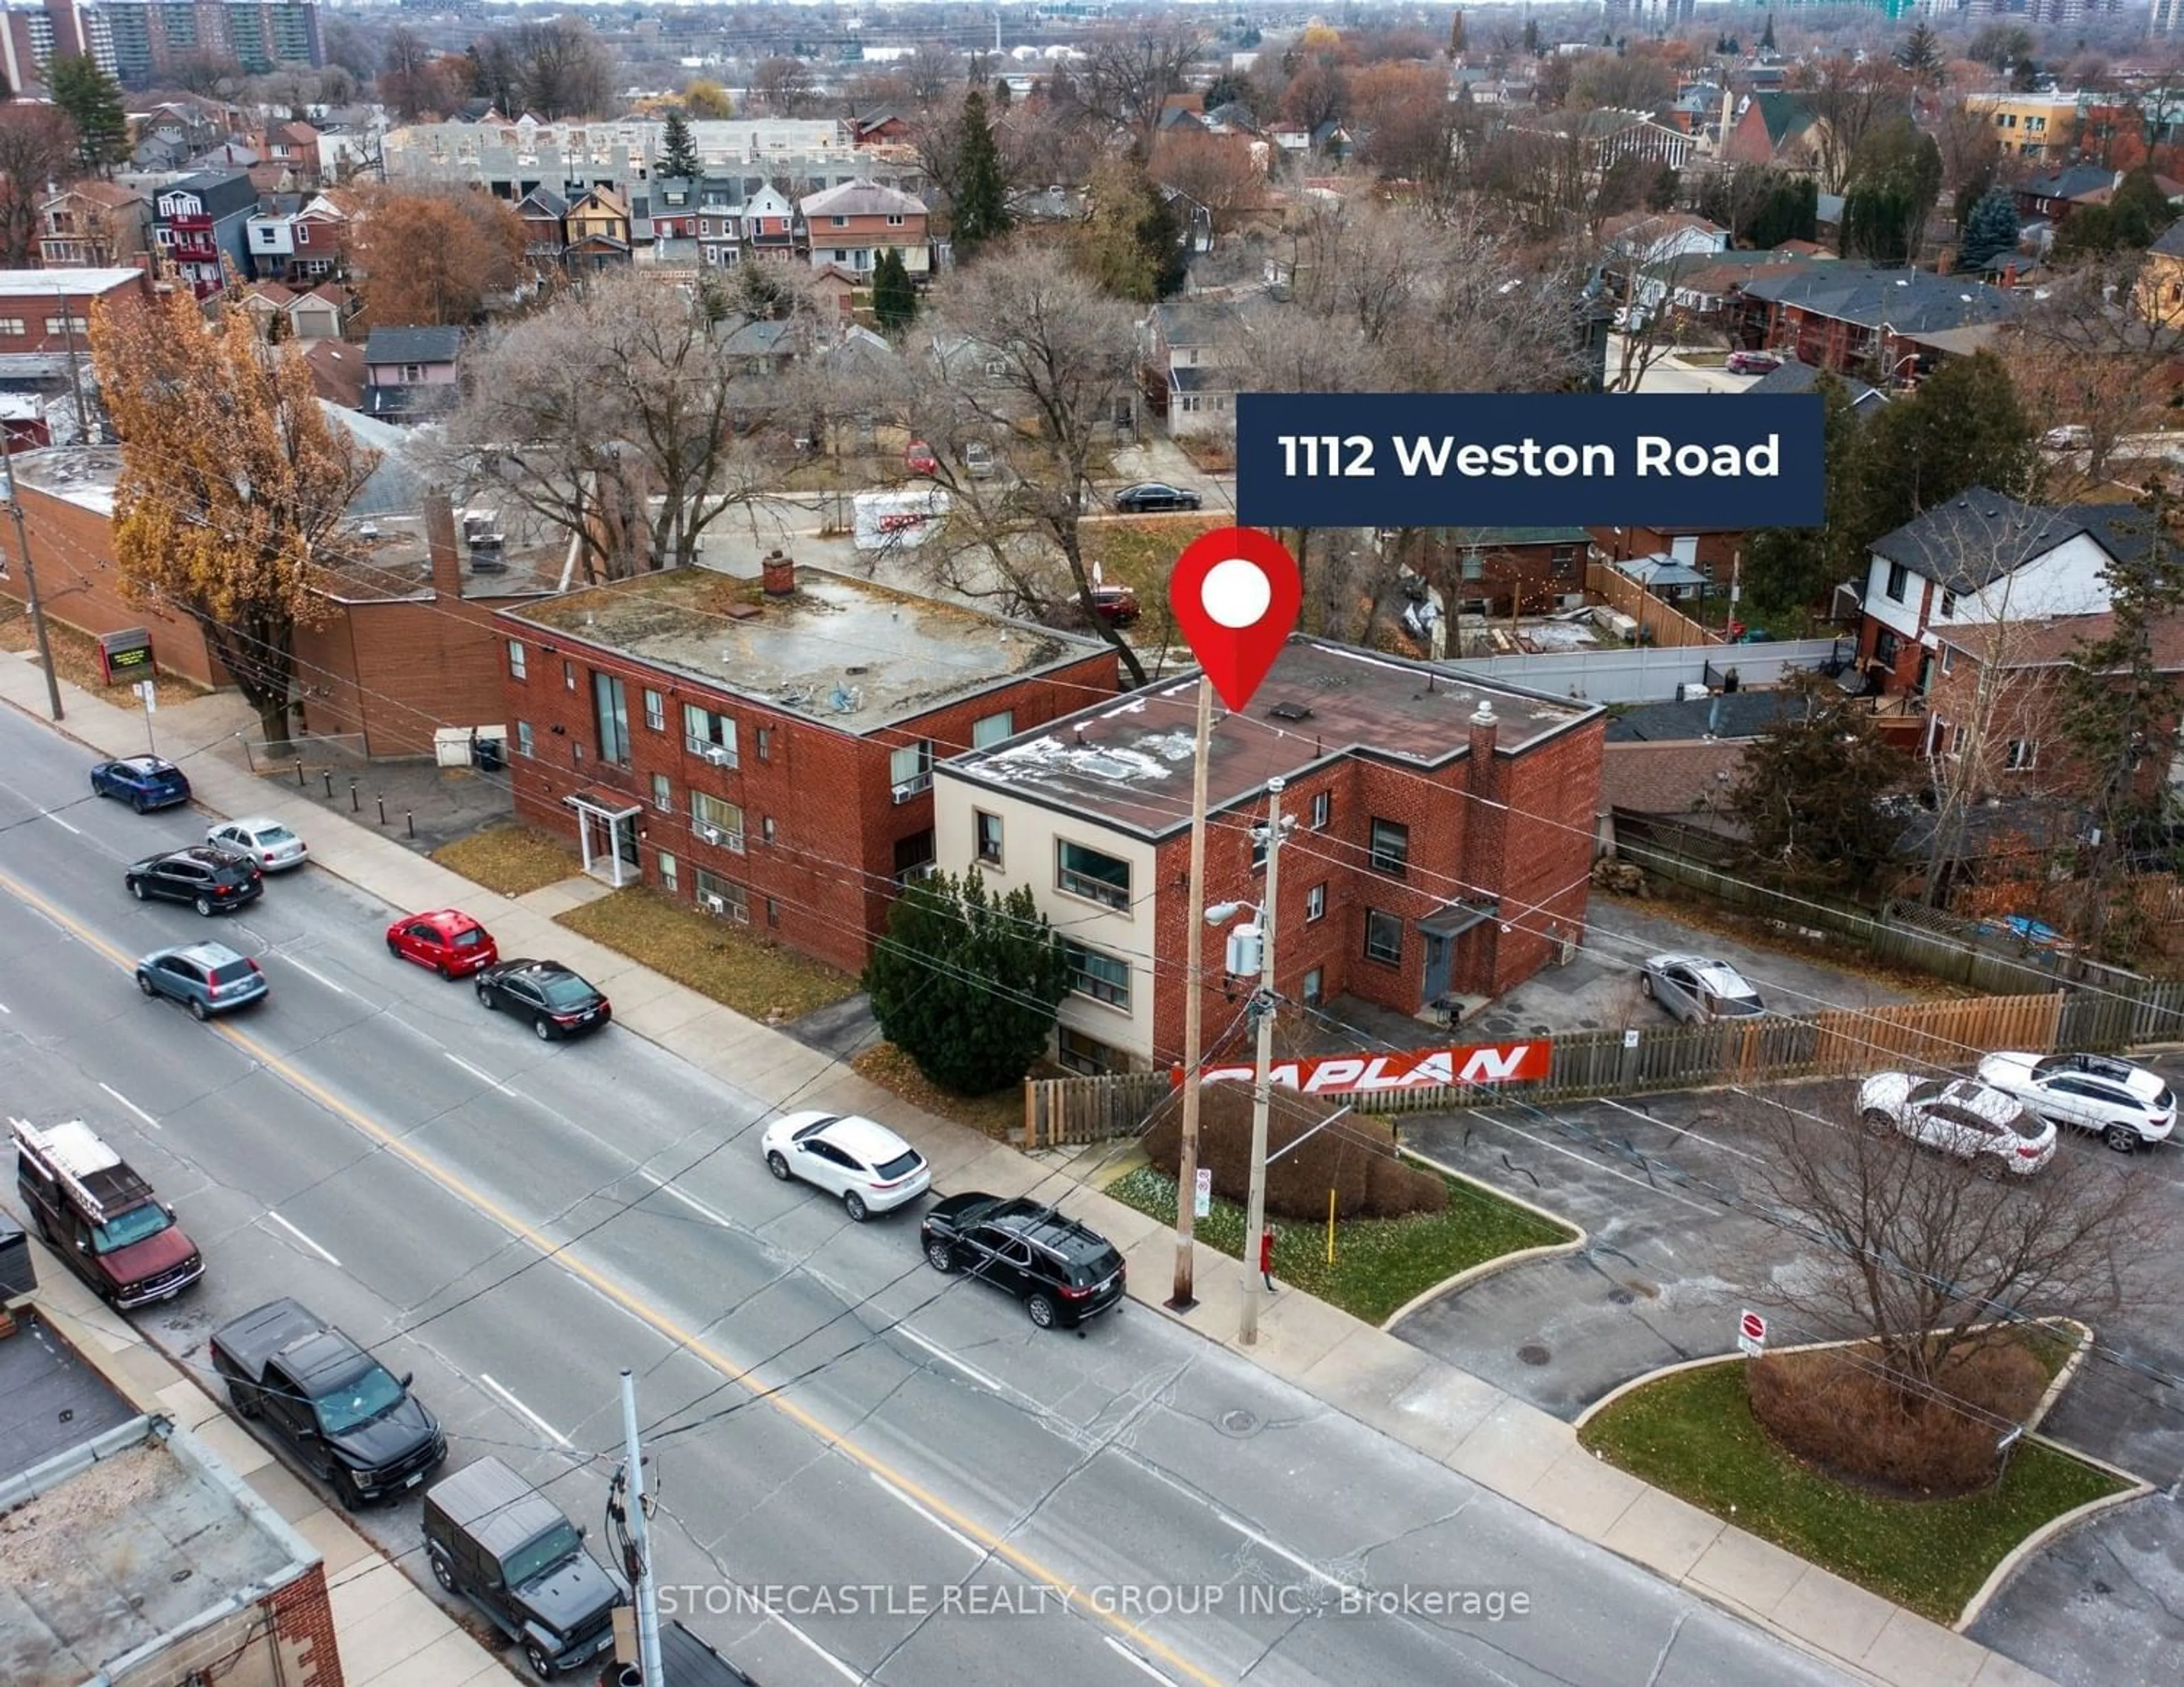 Street view for 1112 Weston Rd, Toronto Ontario M6N 3S4